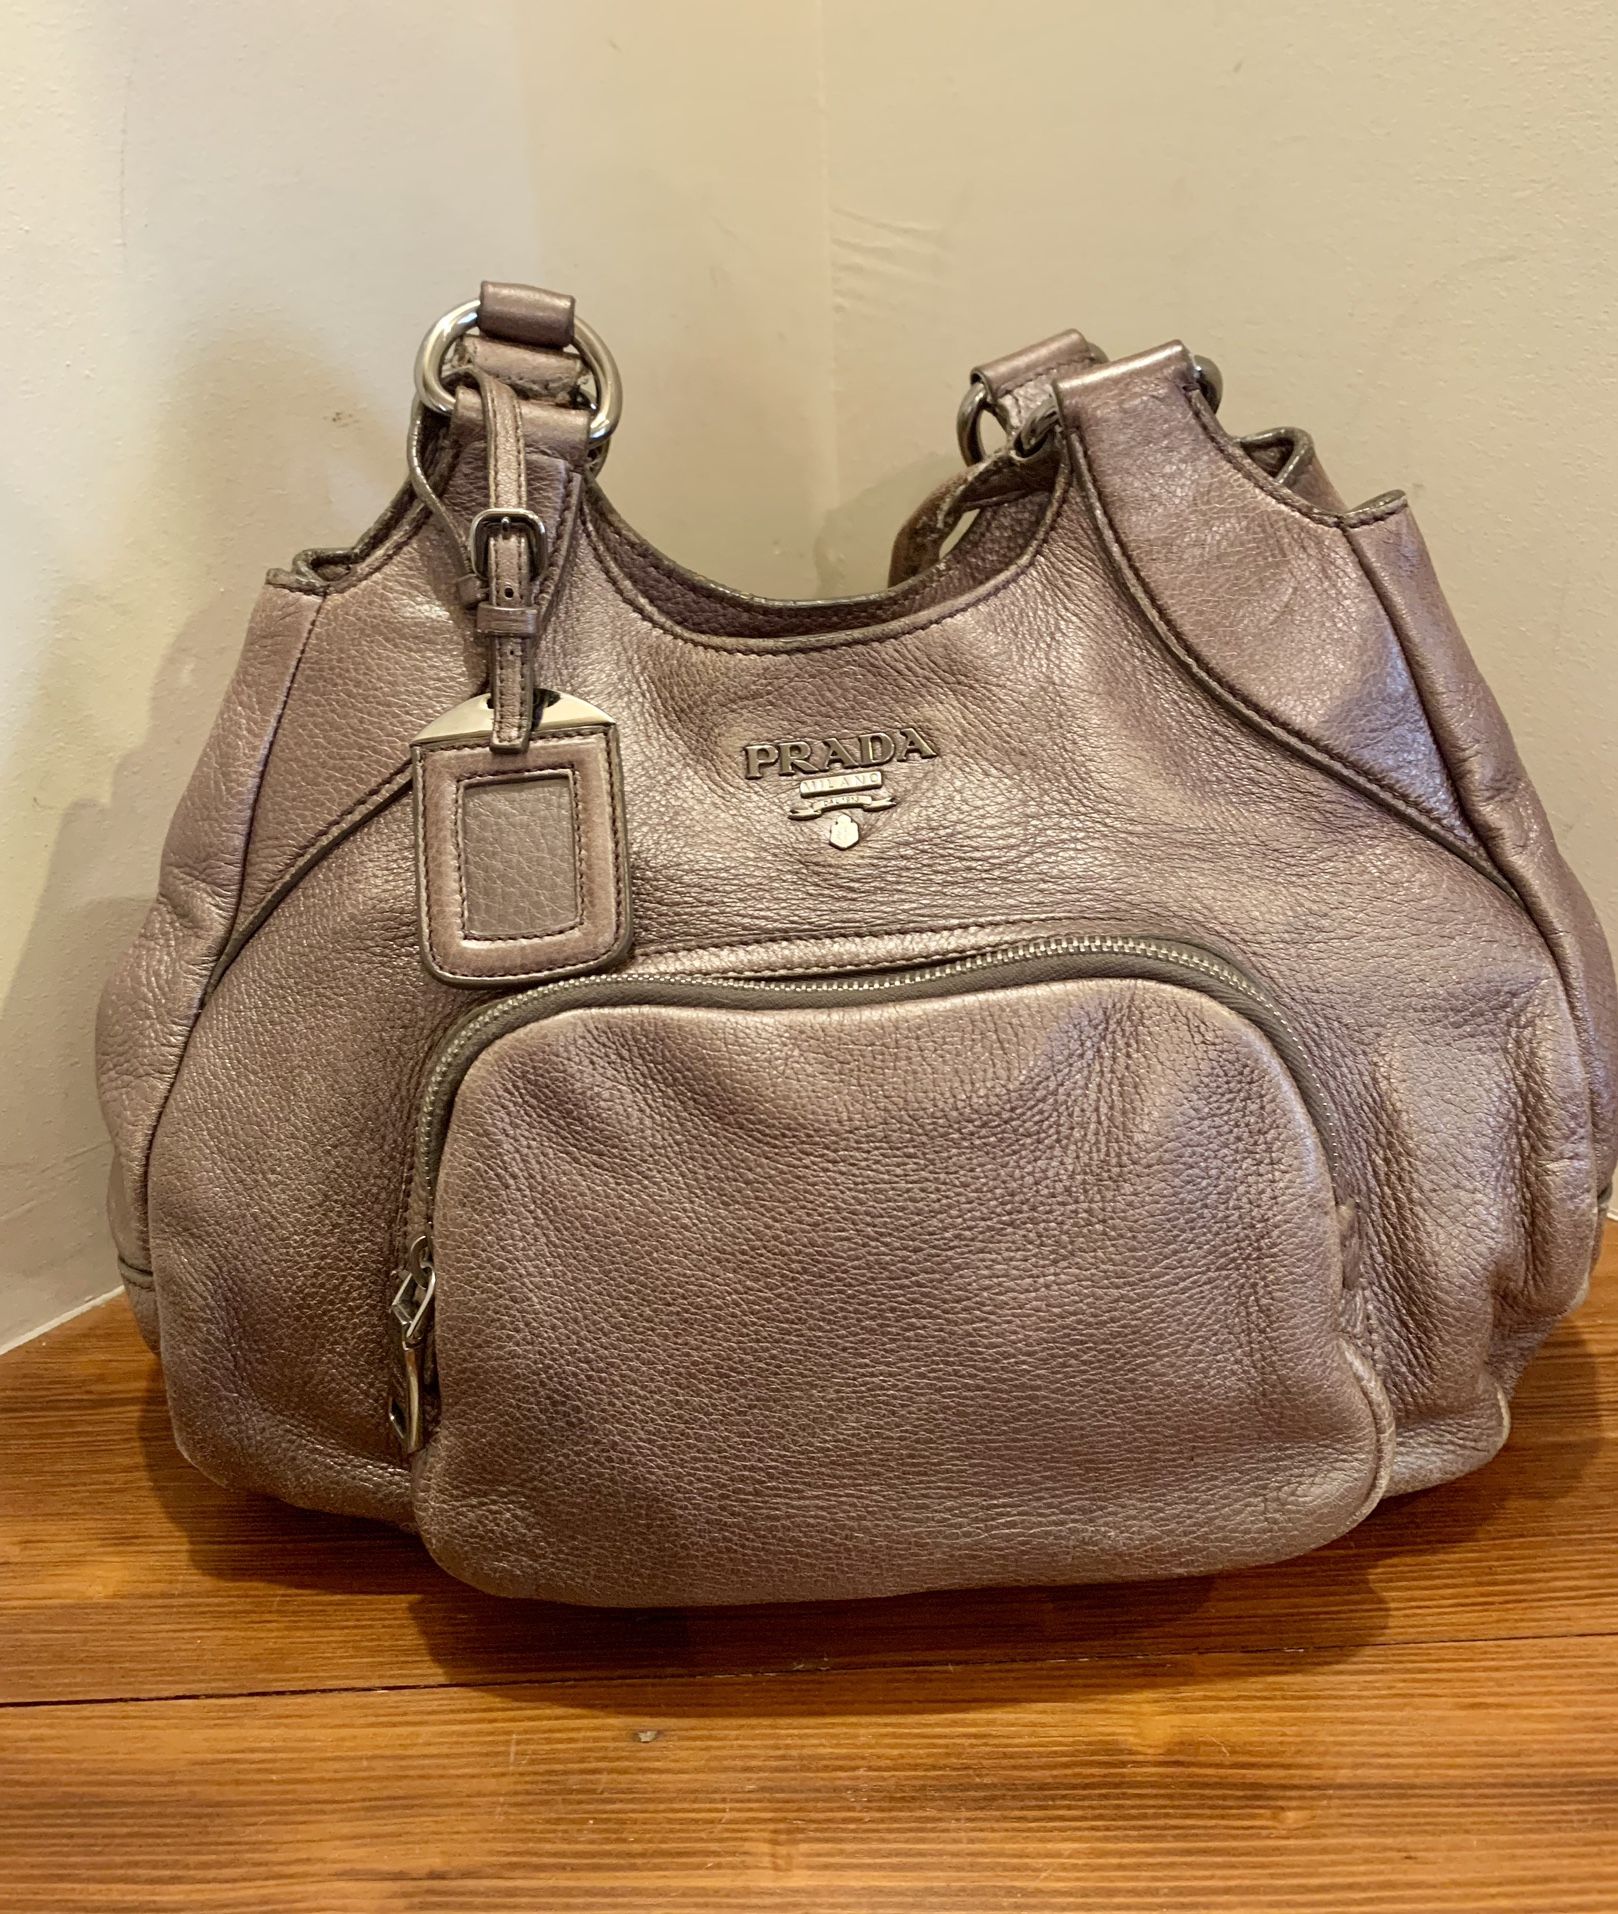 Prada Metallic Leather Handbag Originally $1600